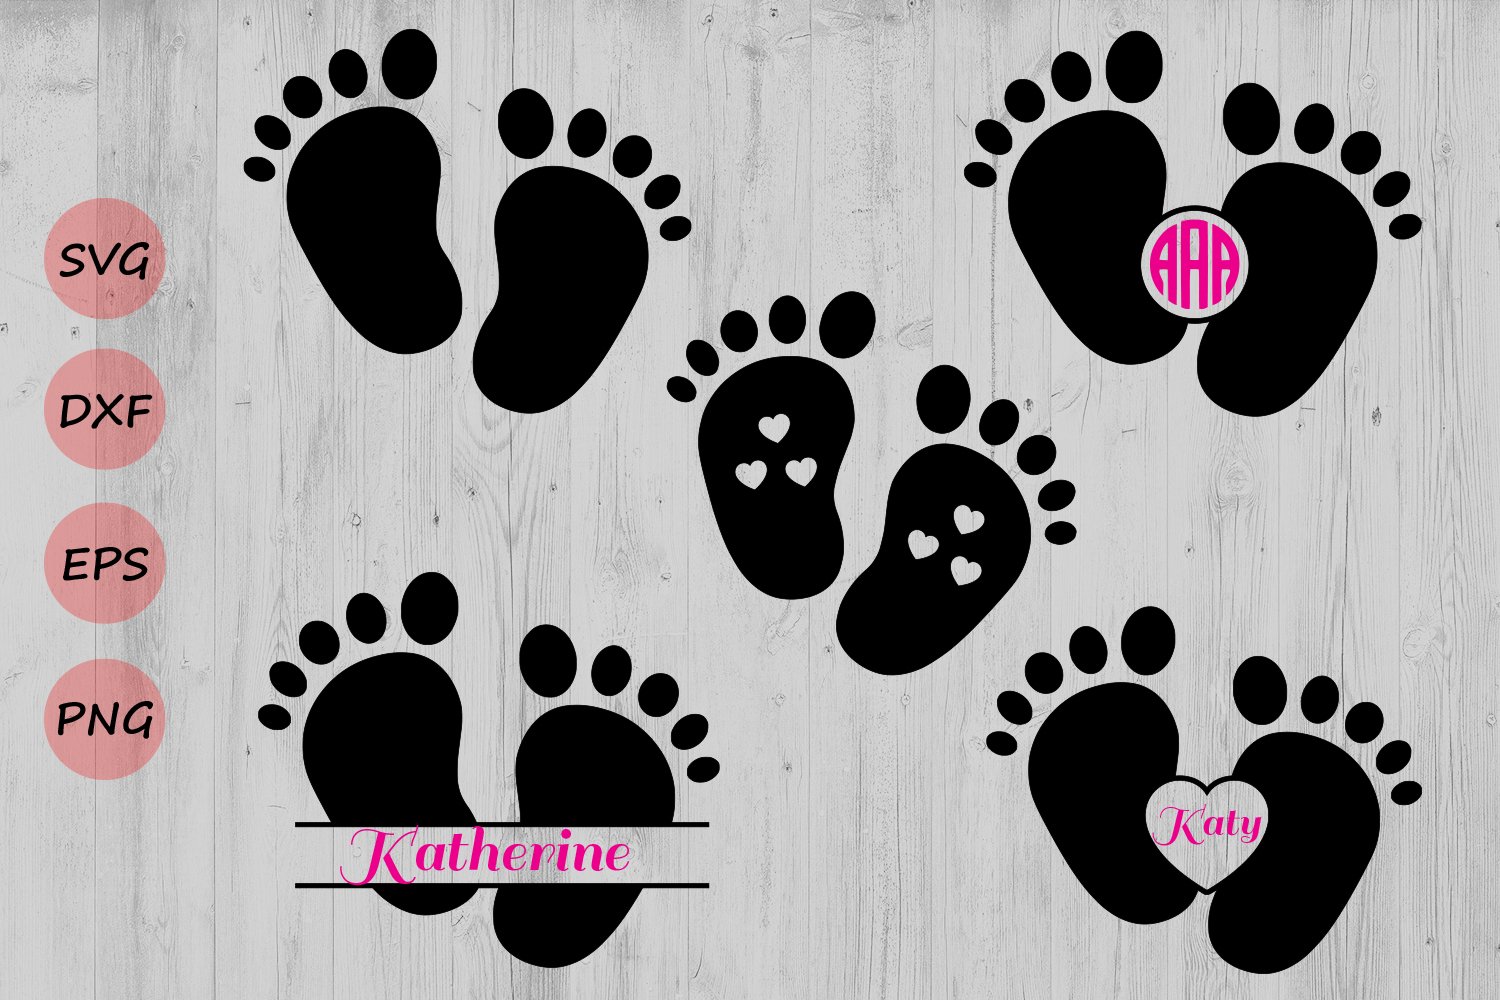 Children's feet are black on gray.